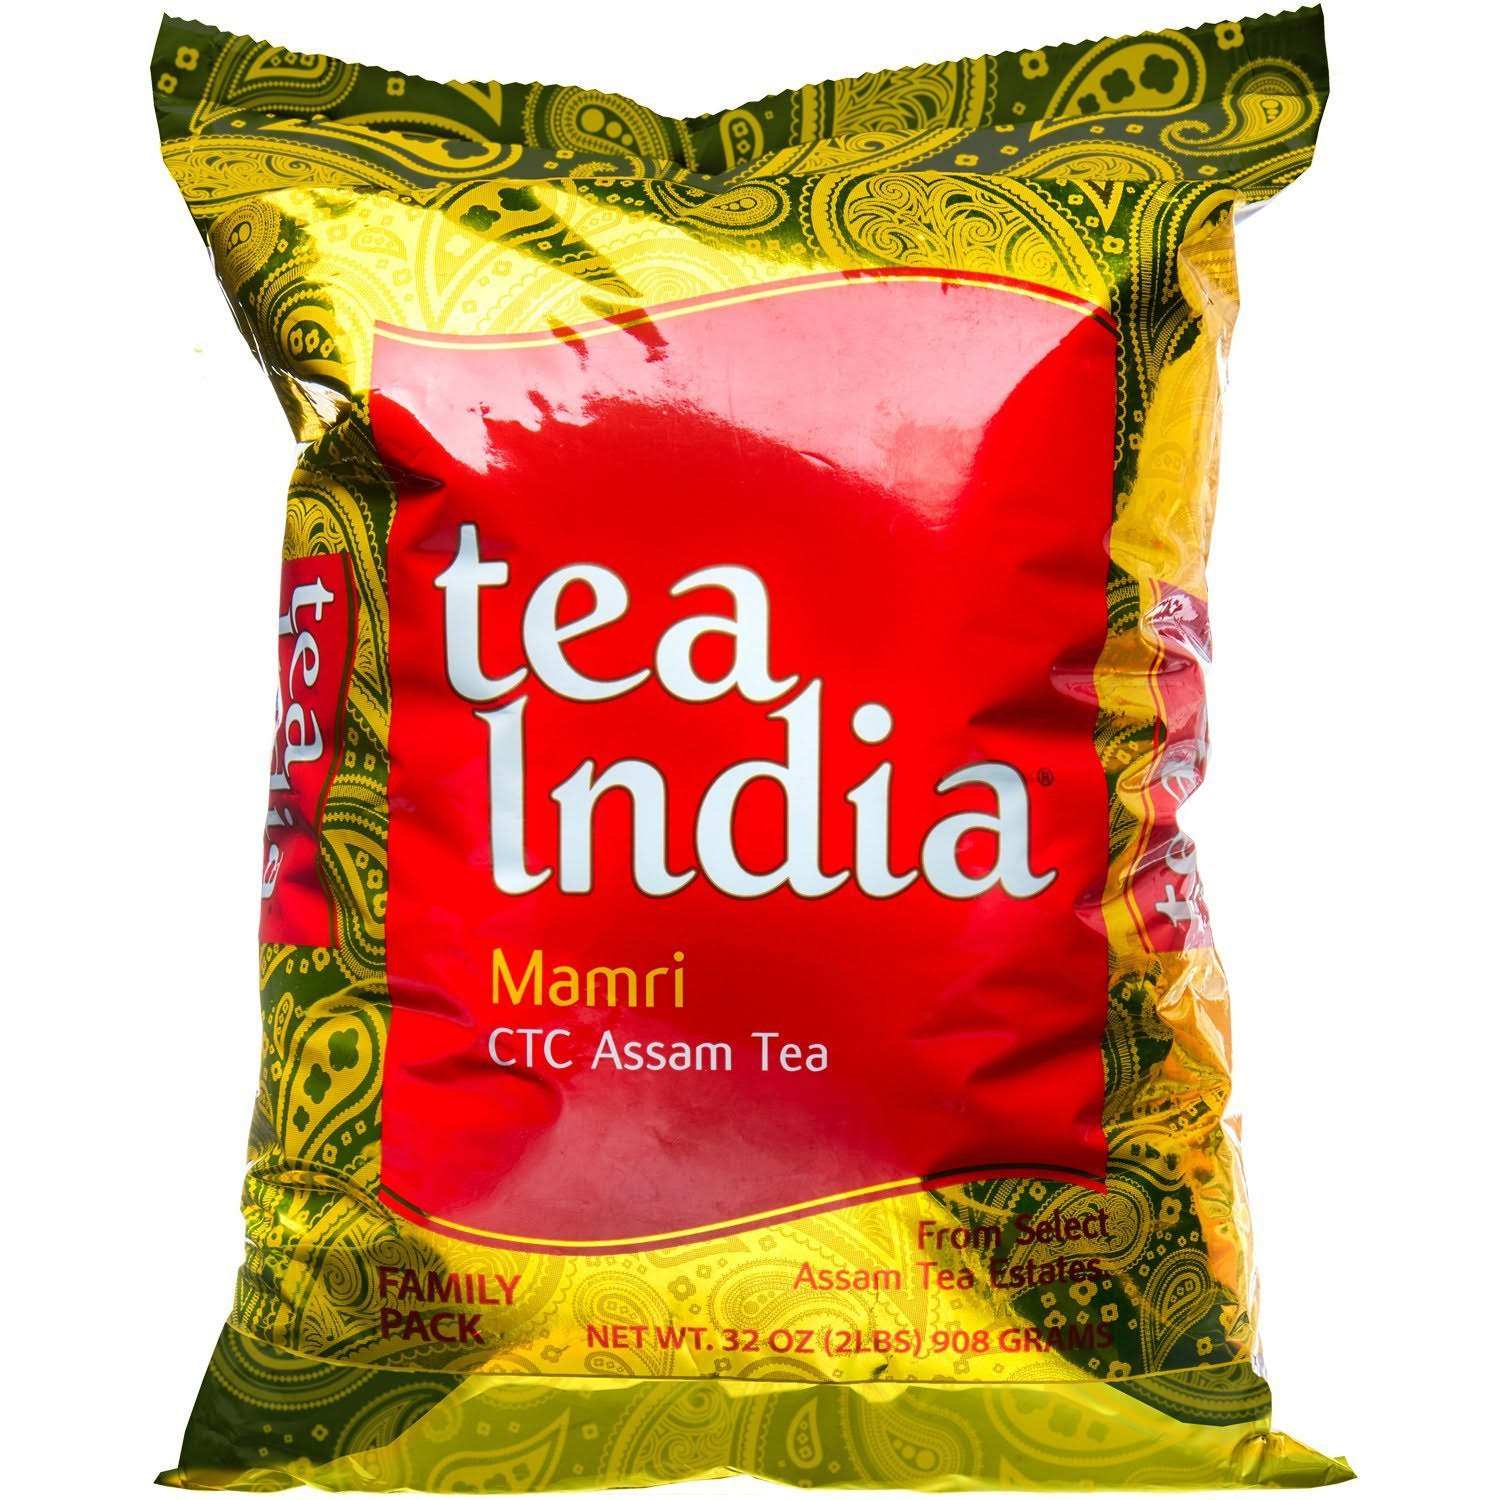 Tea India CTC Mamri Assam loose Leaf Tea 2lbs